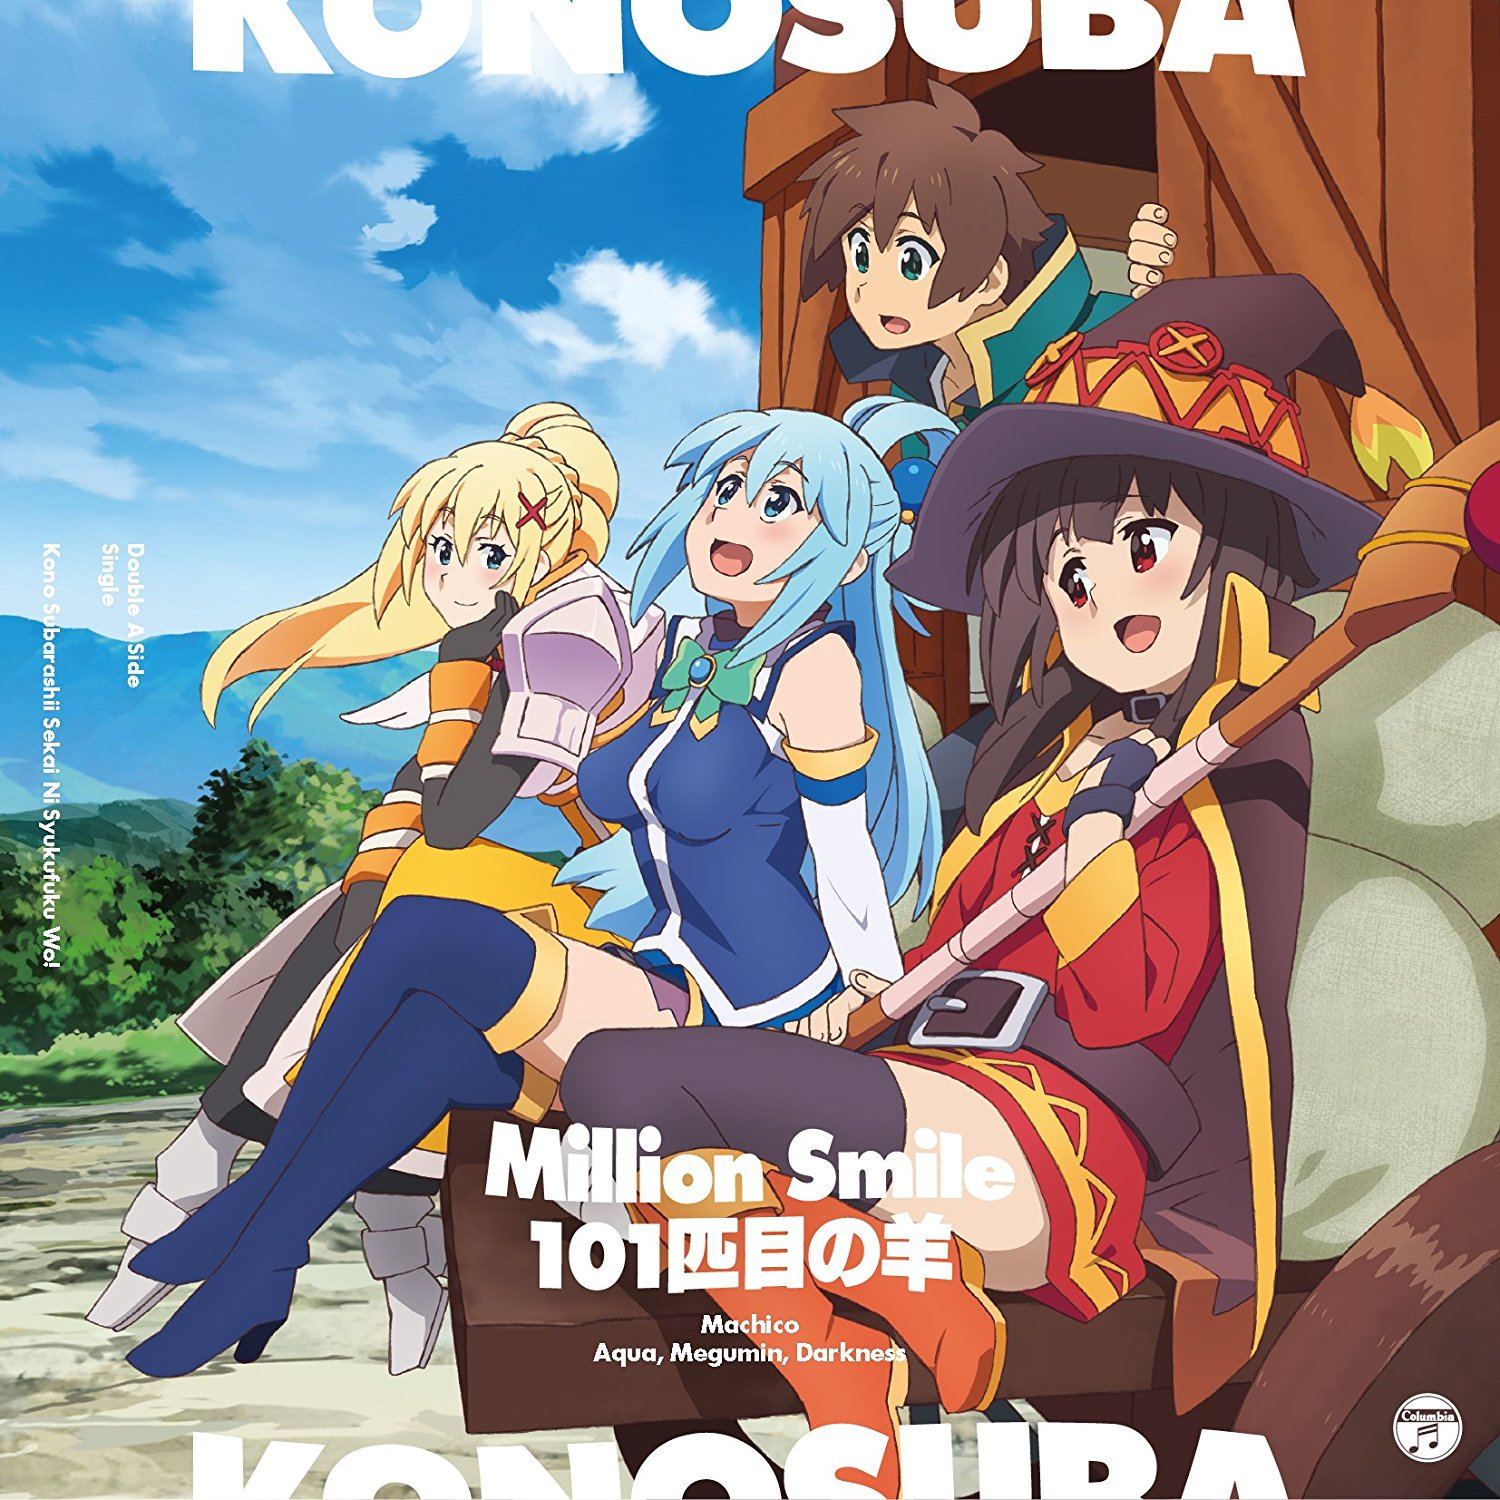 1 Mil Subs Contest: Megumin from Konosuba : r/anime